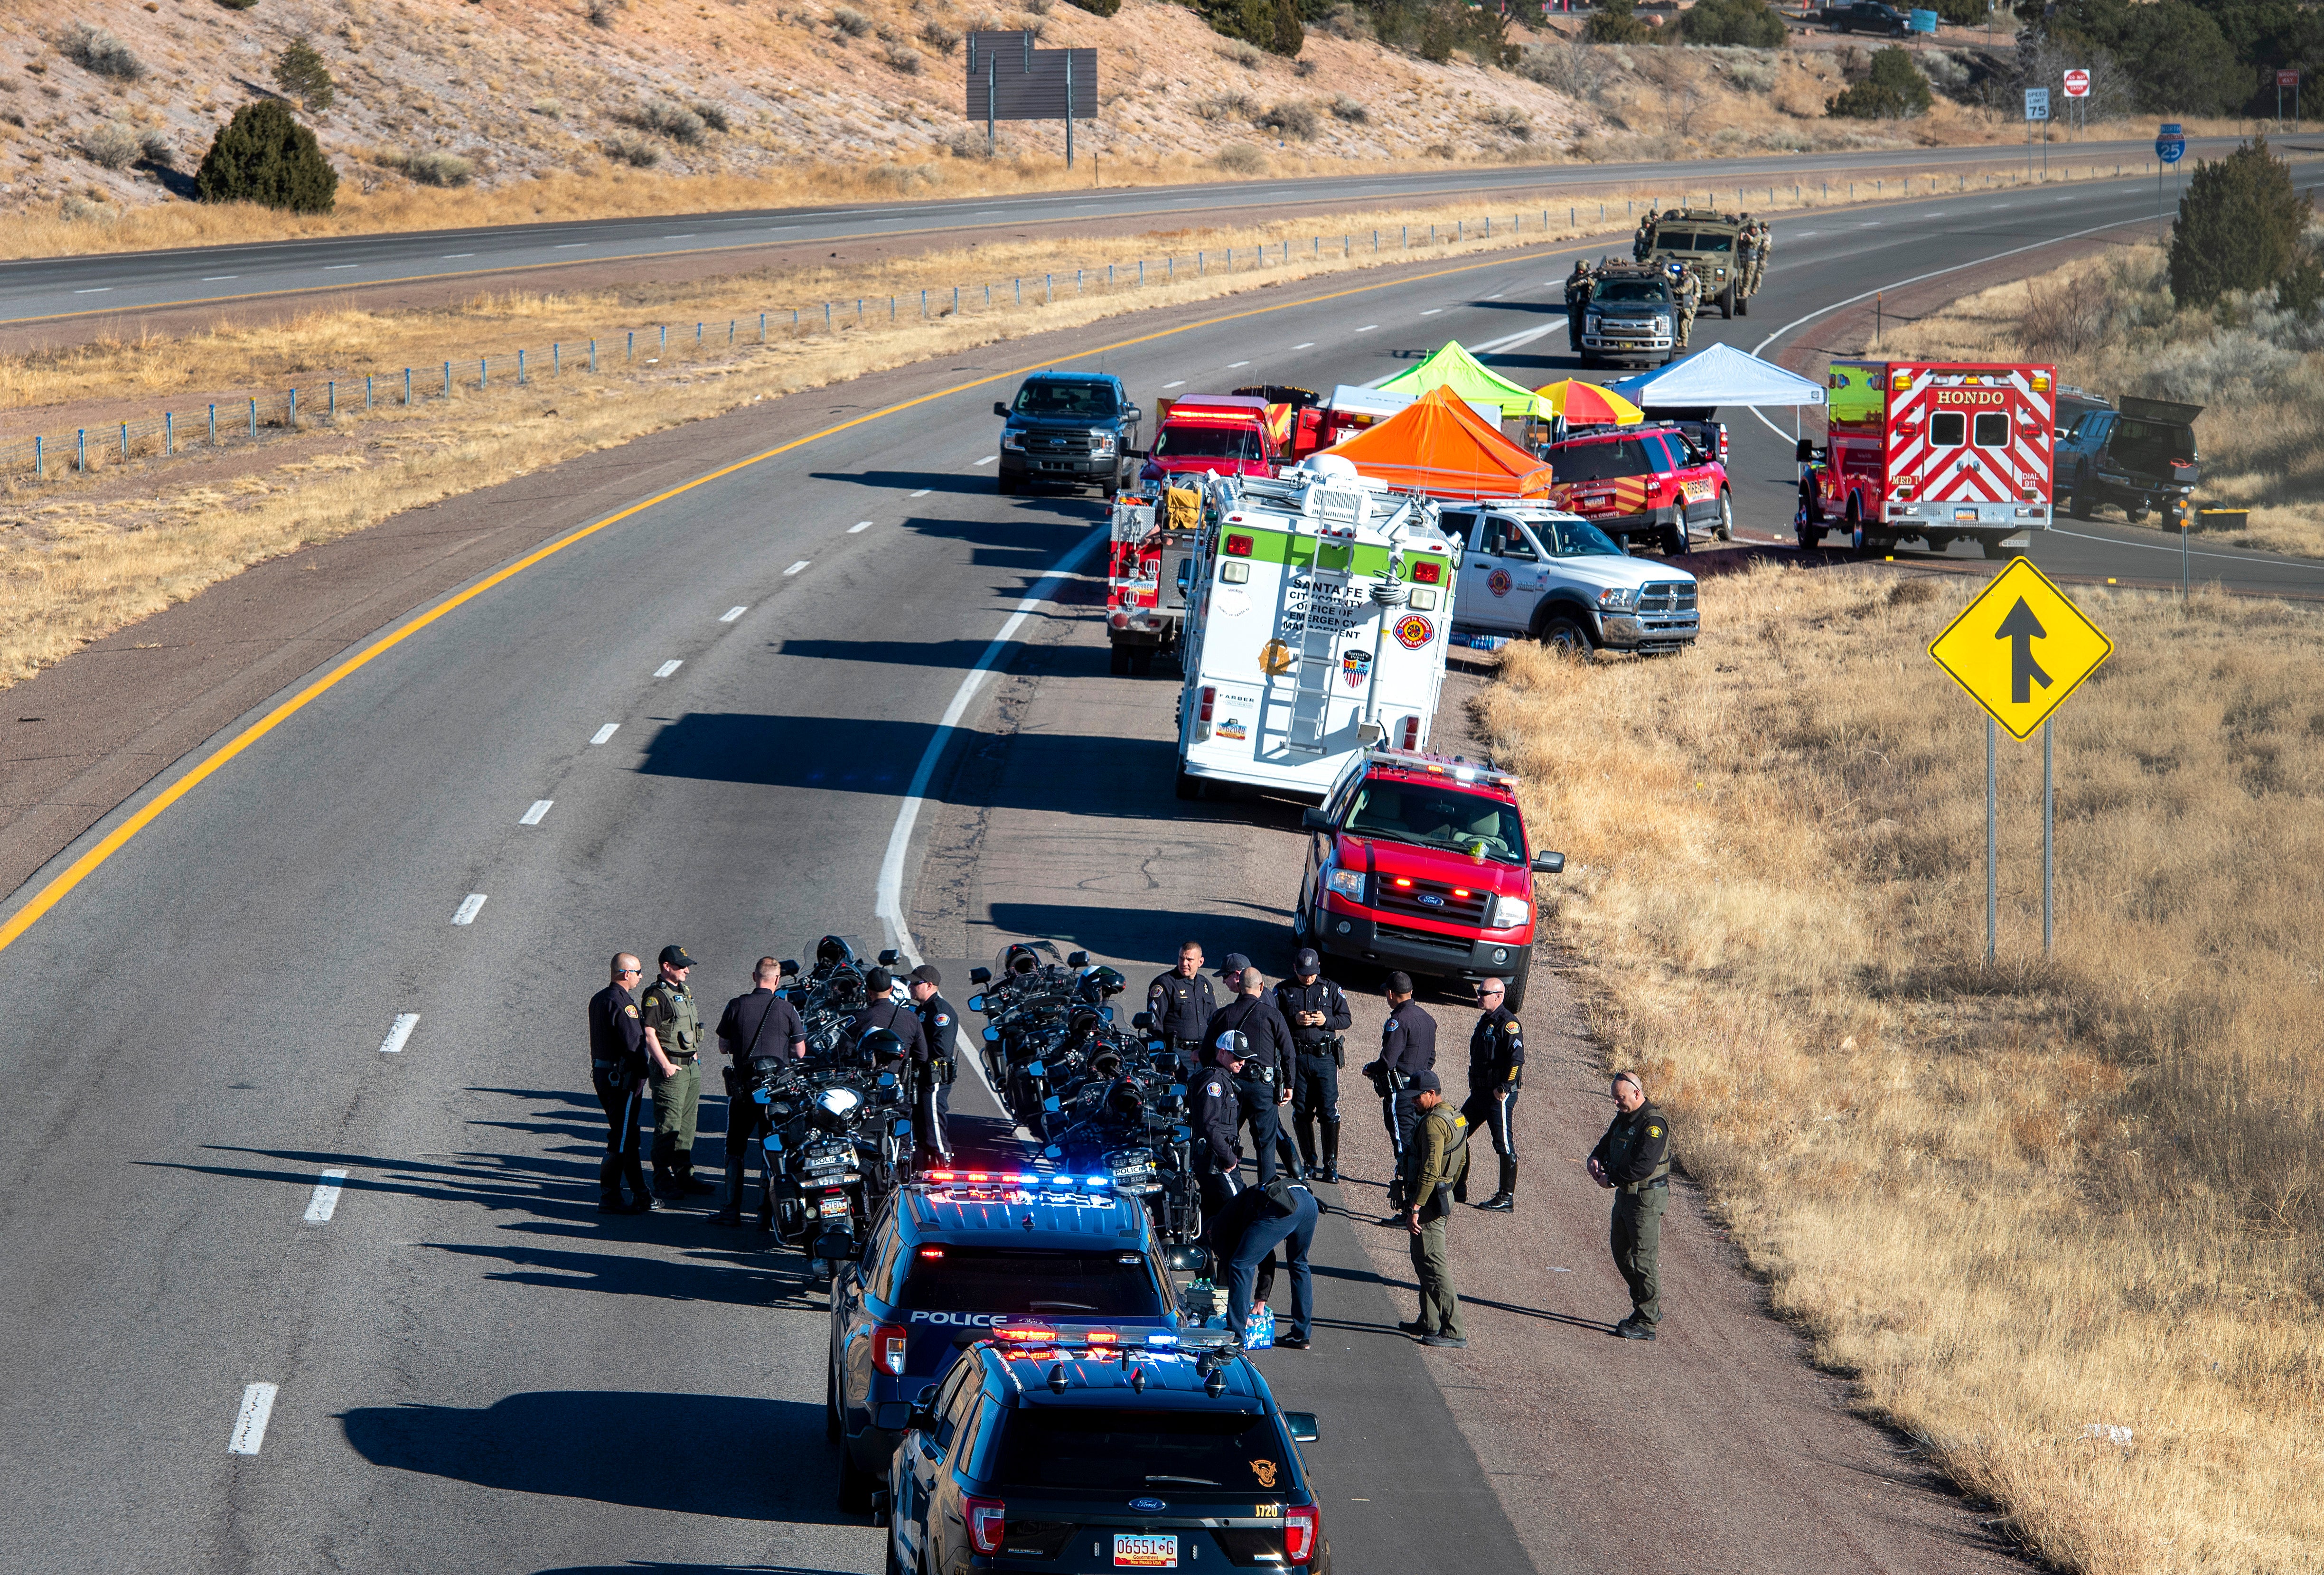 Santa Fe Police Officer Killed